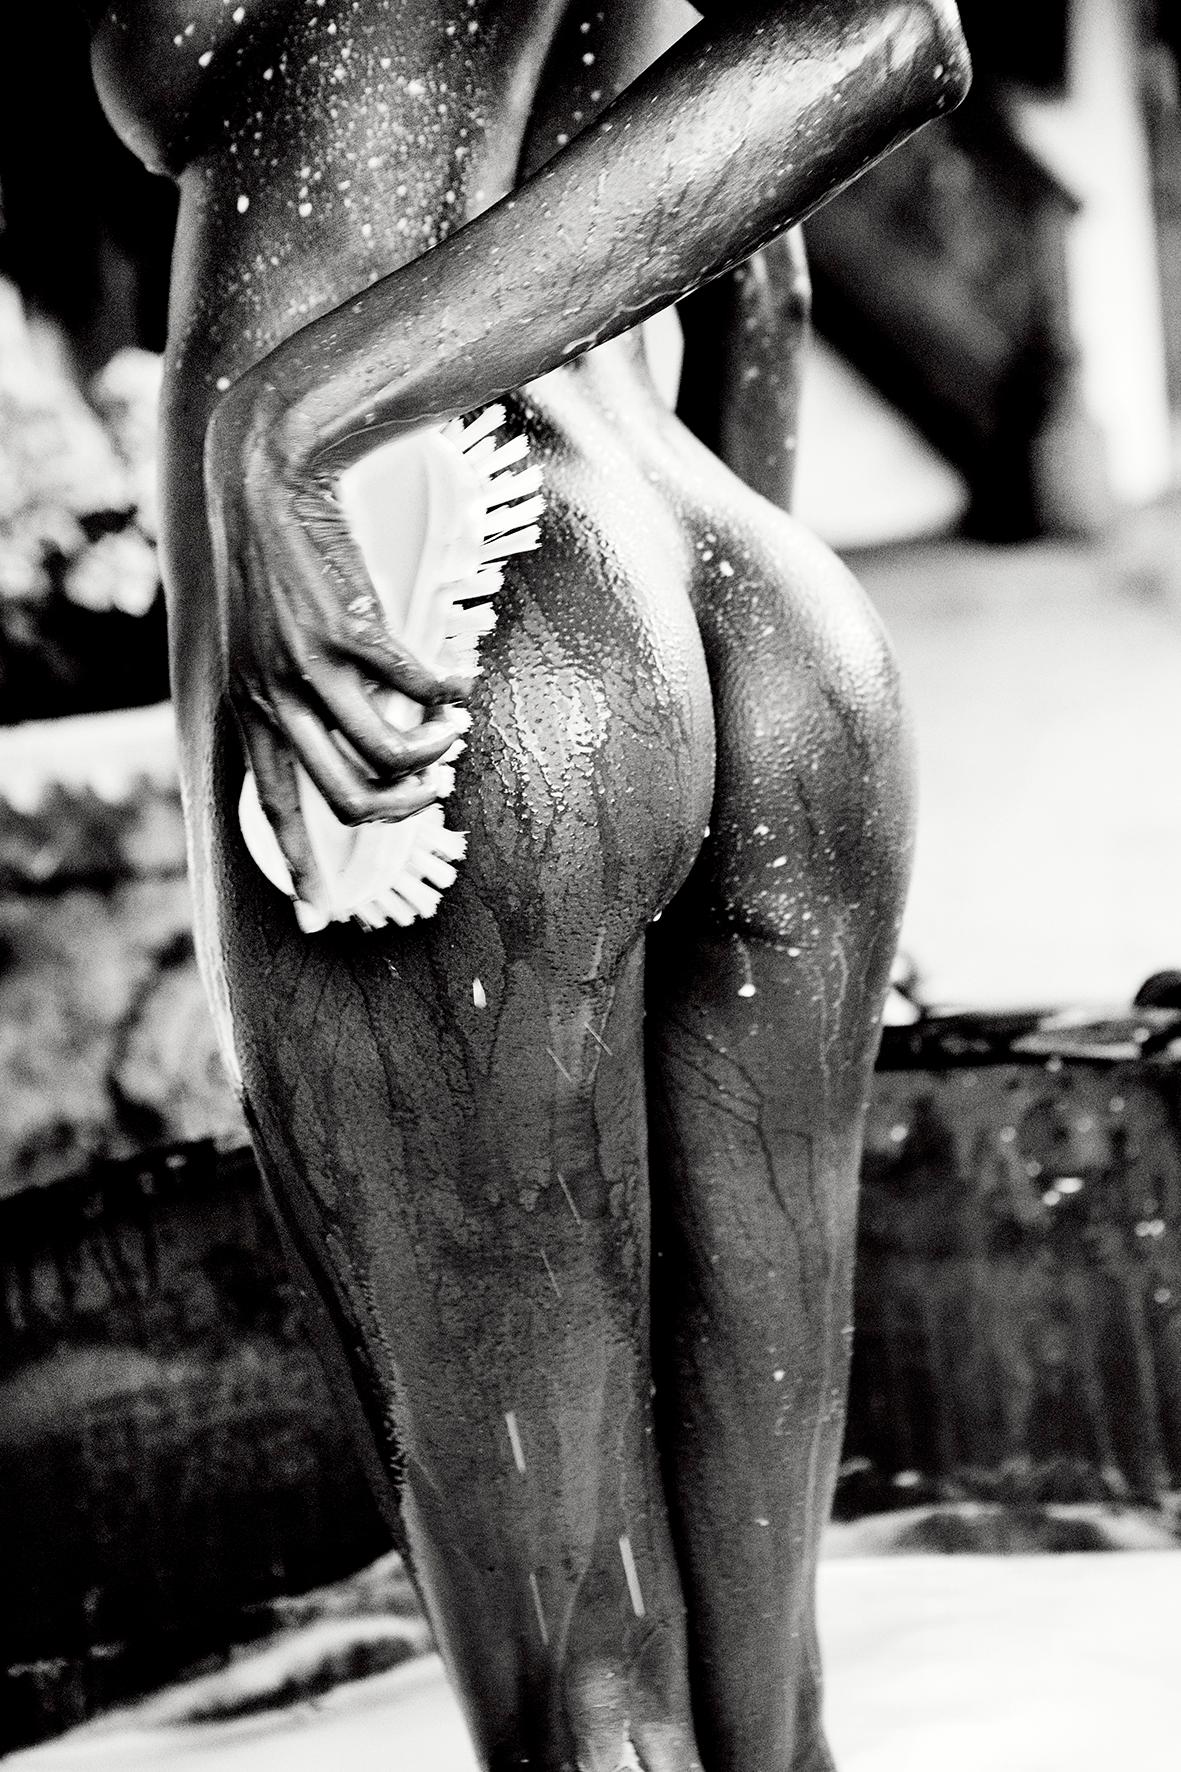 Ellen von Unwerth Nude Photograph - Squeeze & Shape from Heimat - nude Model washing herself, fine art photography